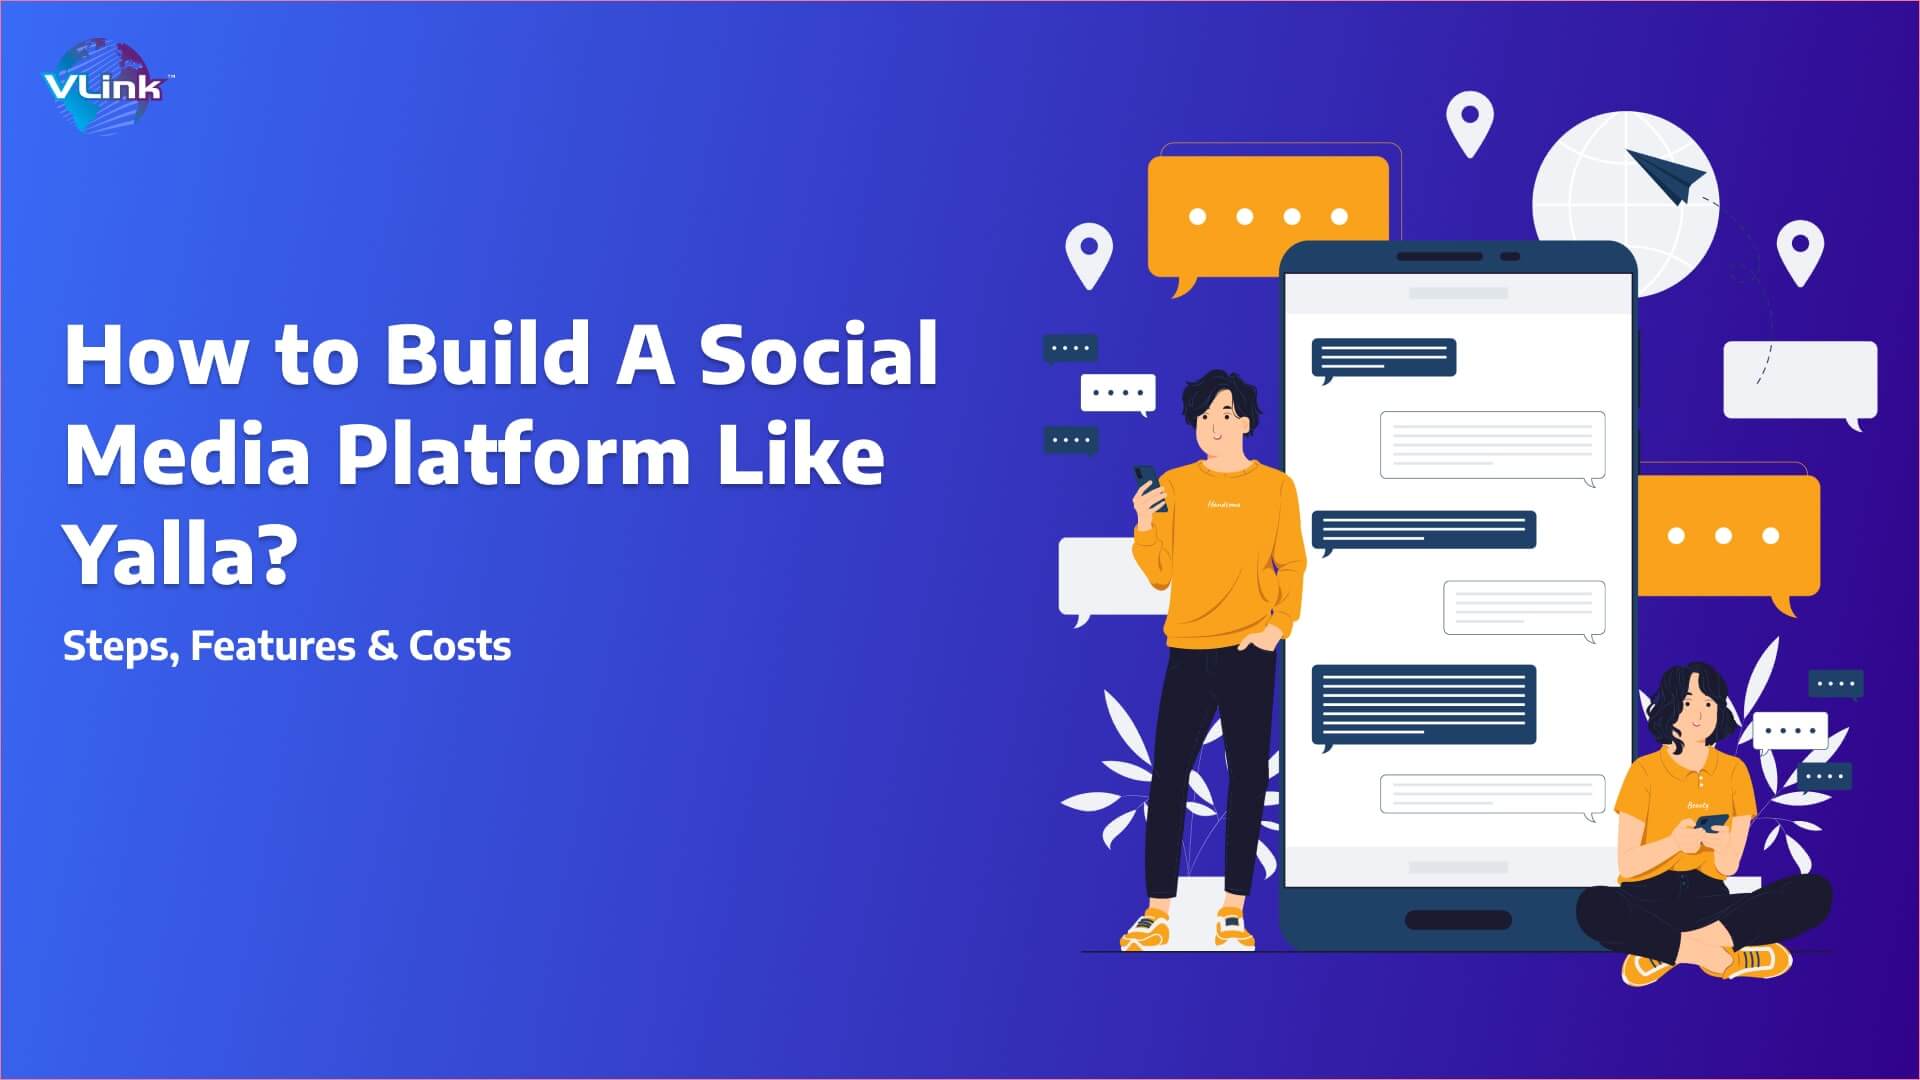 How to Build a Social Media Platform Like Yalla?